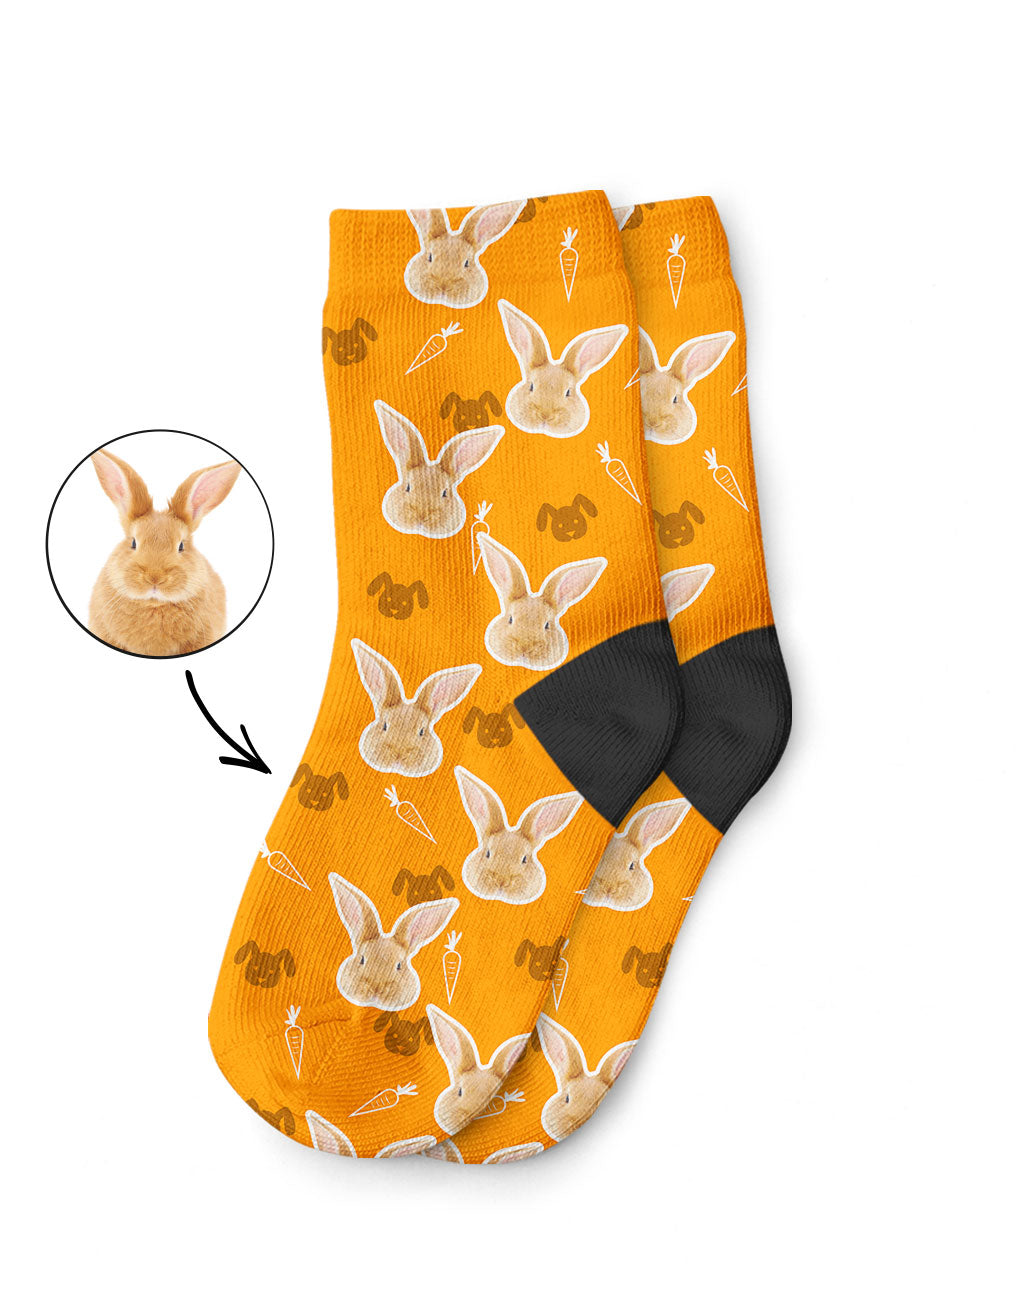 Your Rabbit on Kids Socks